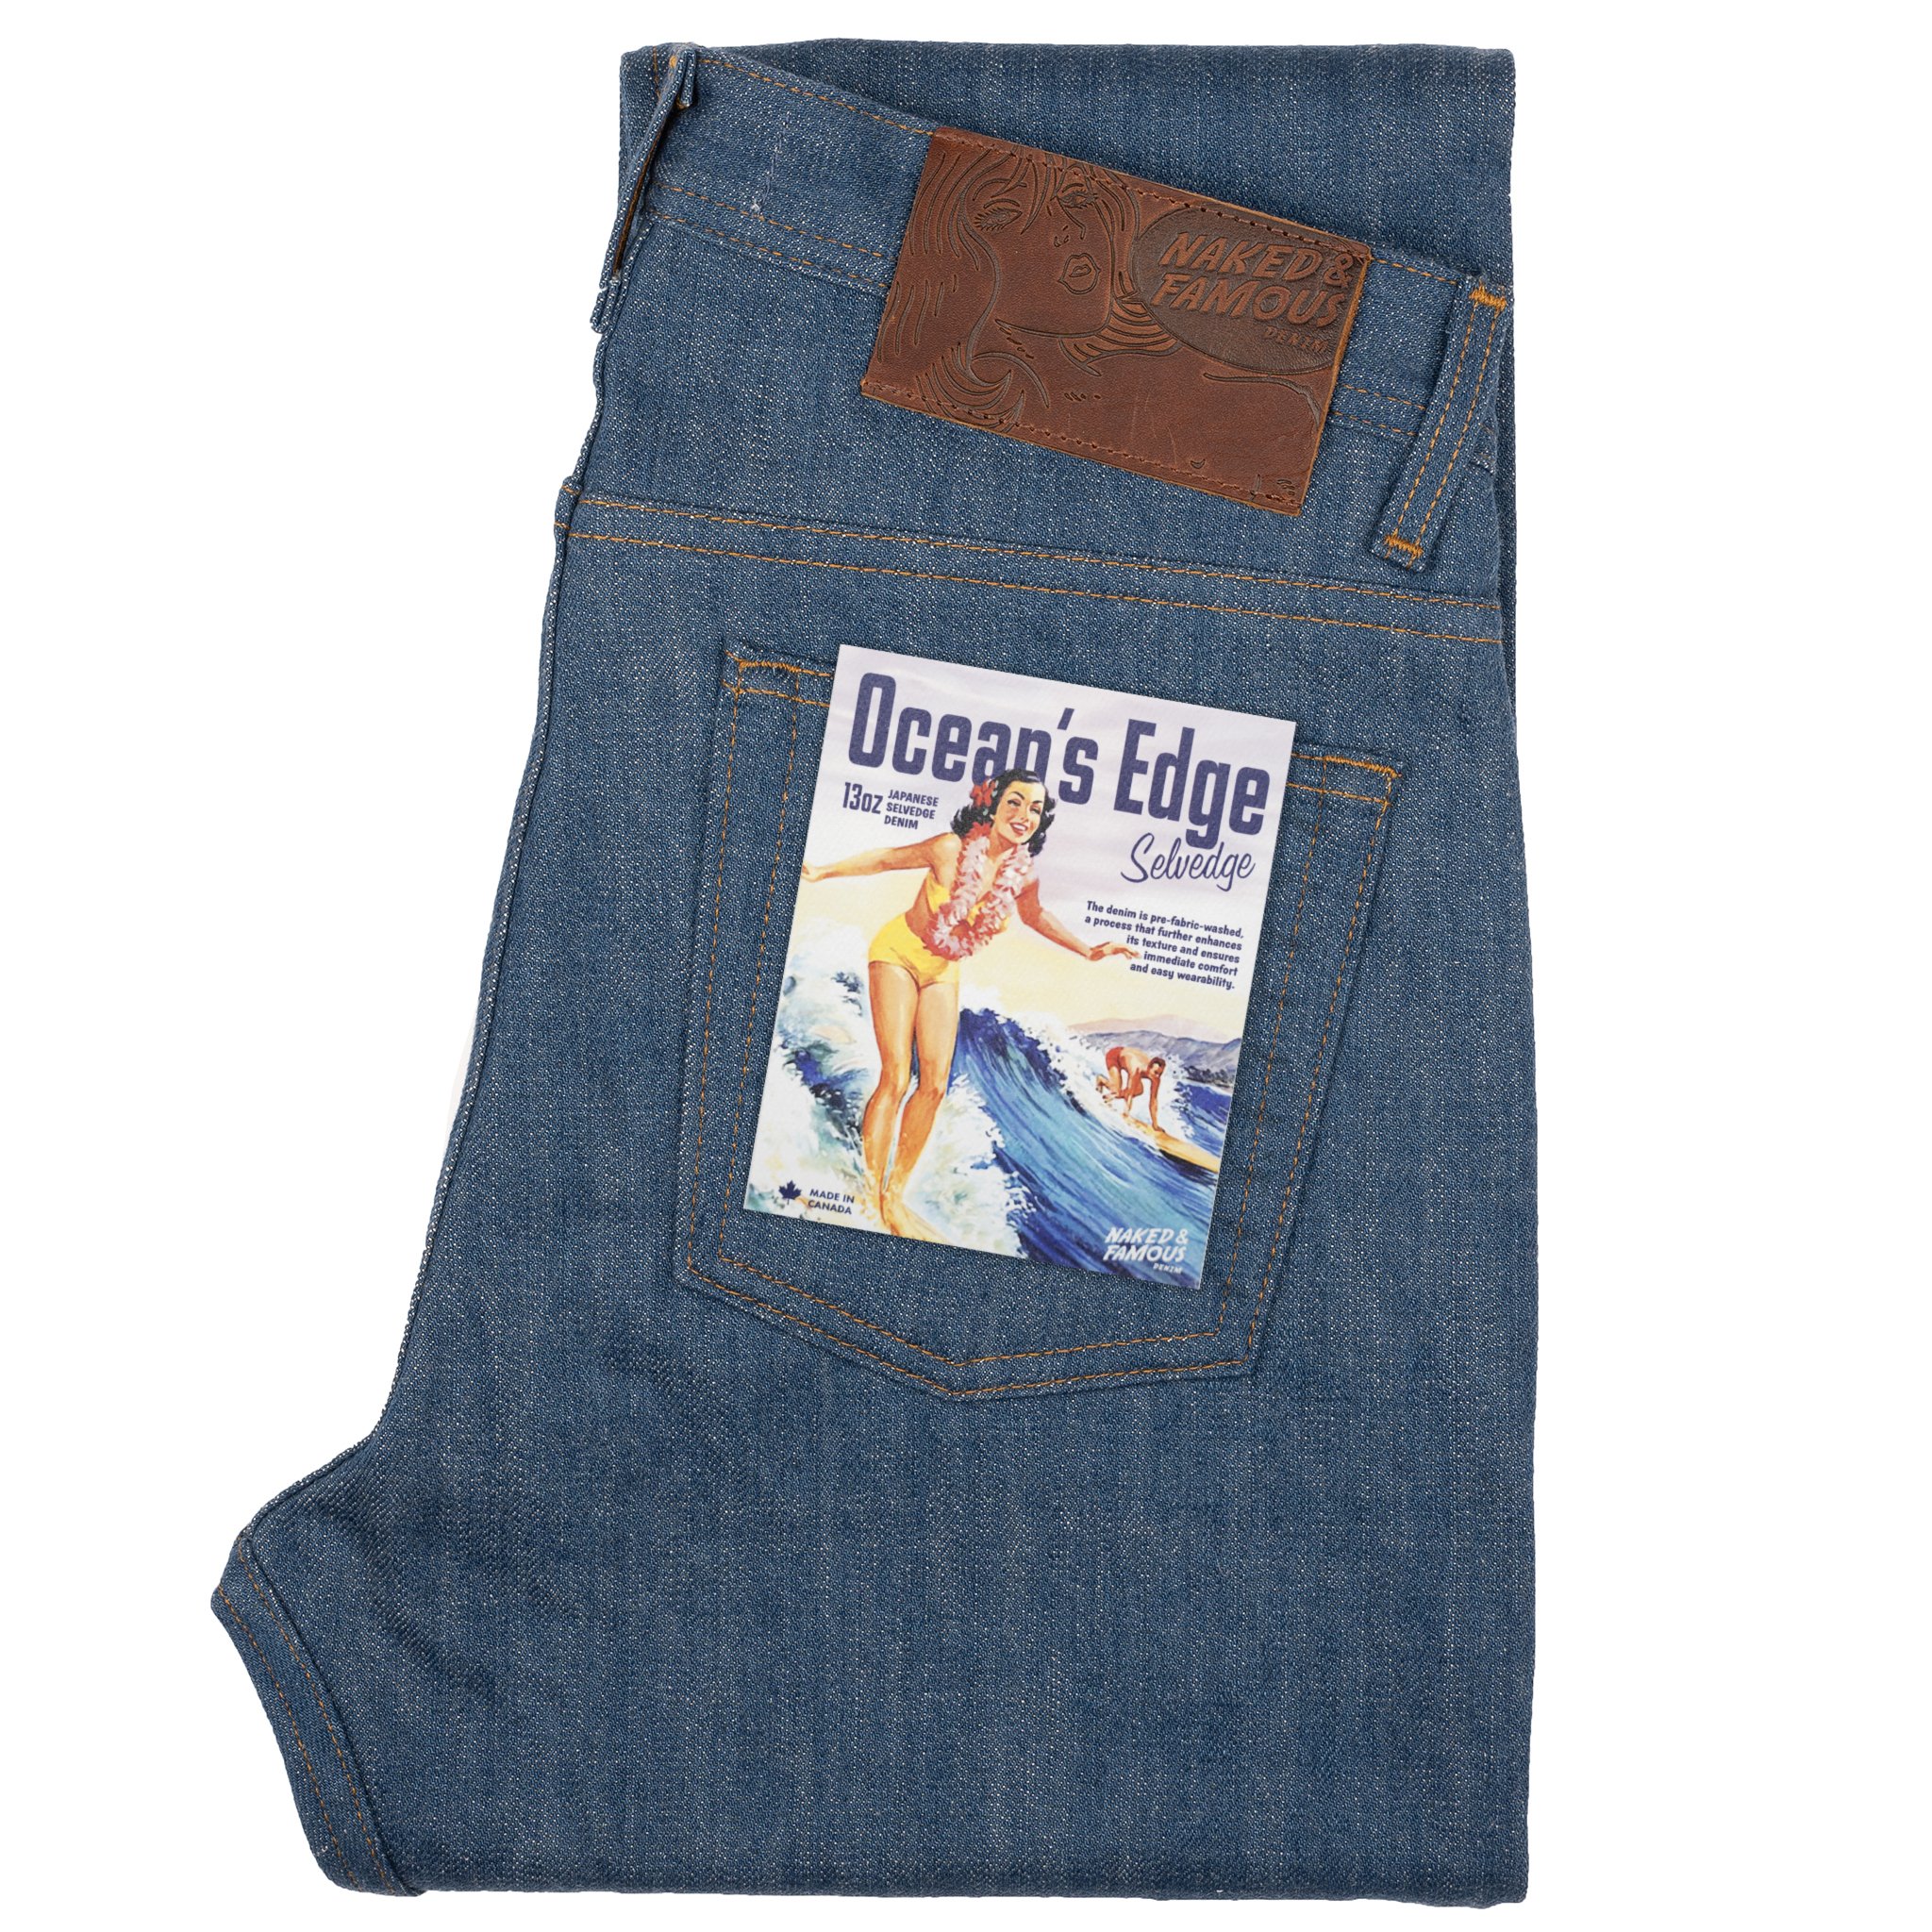  Ocean’s Edge Selvedge Jeans 